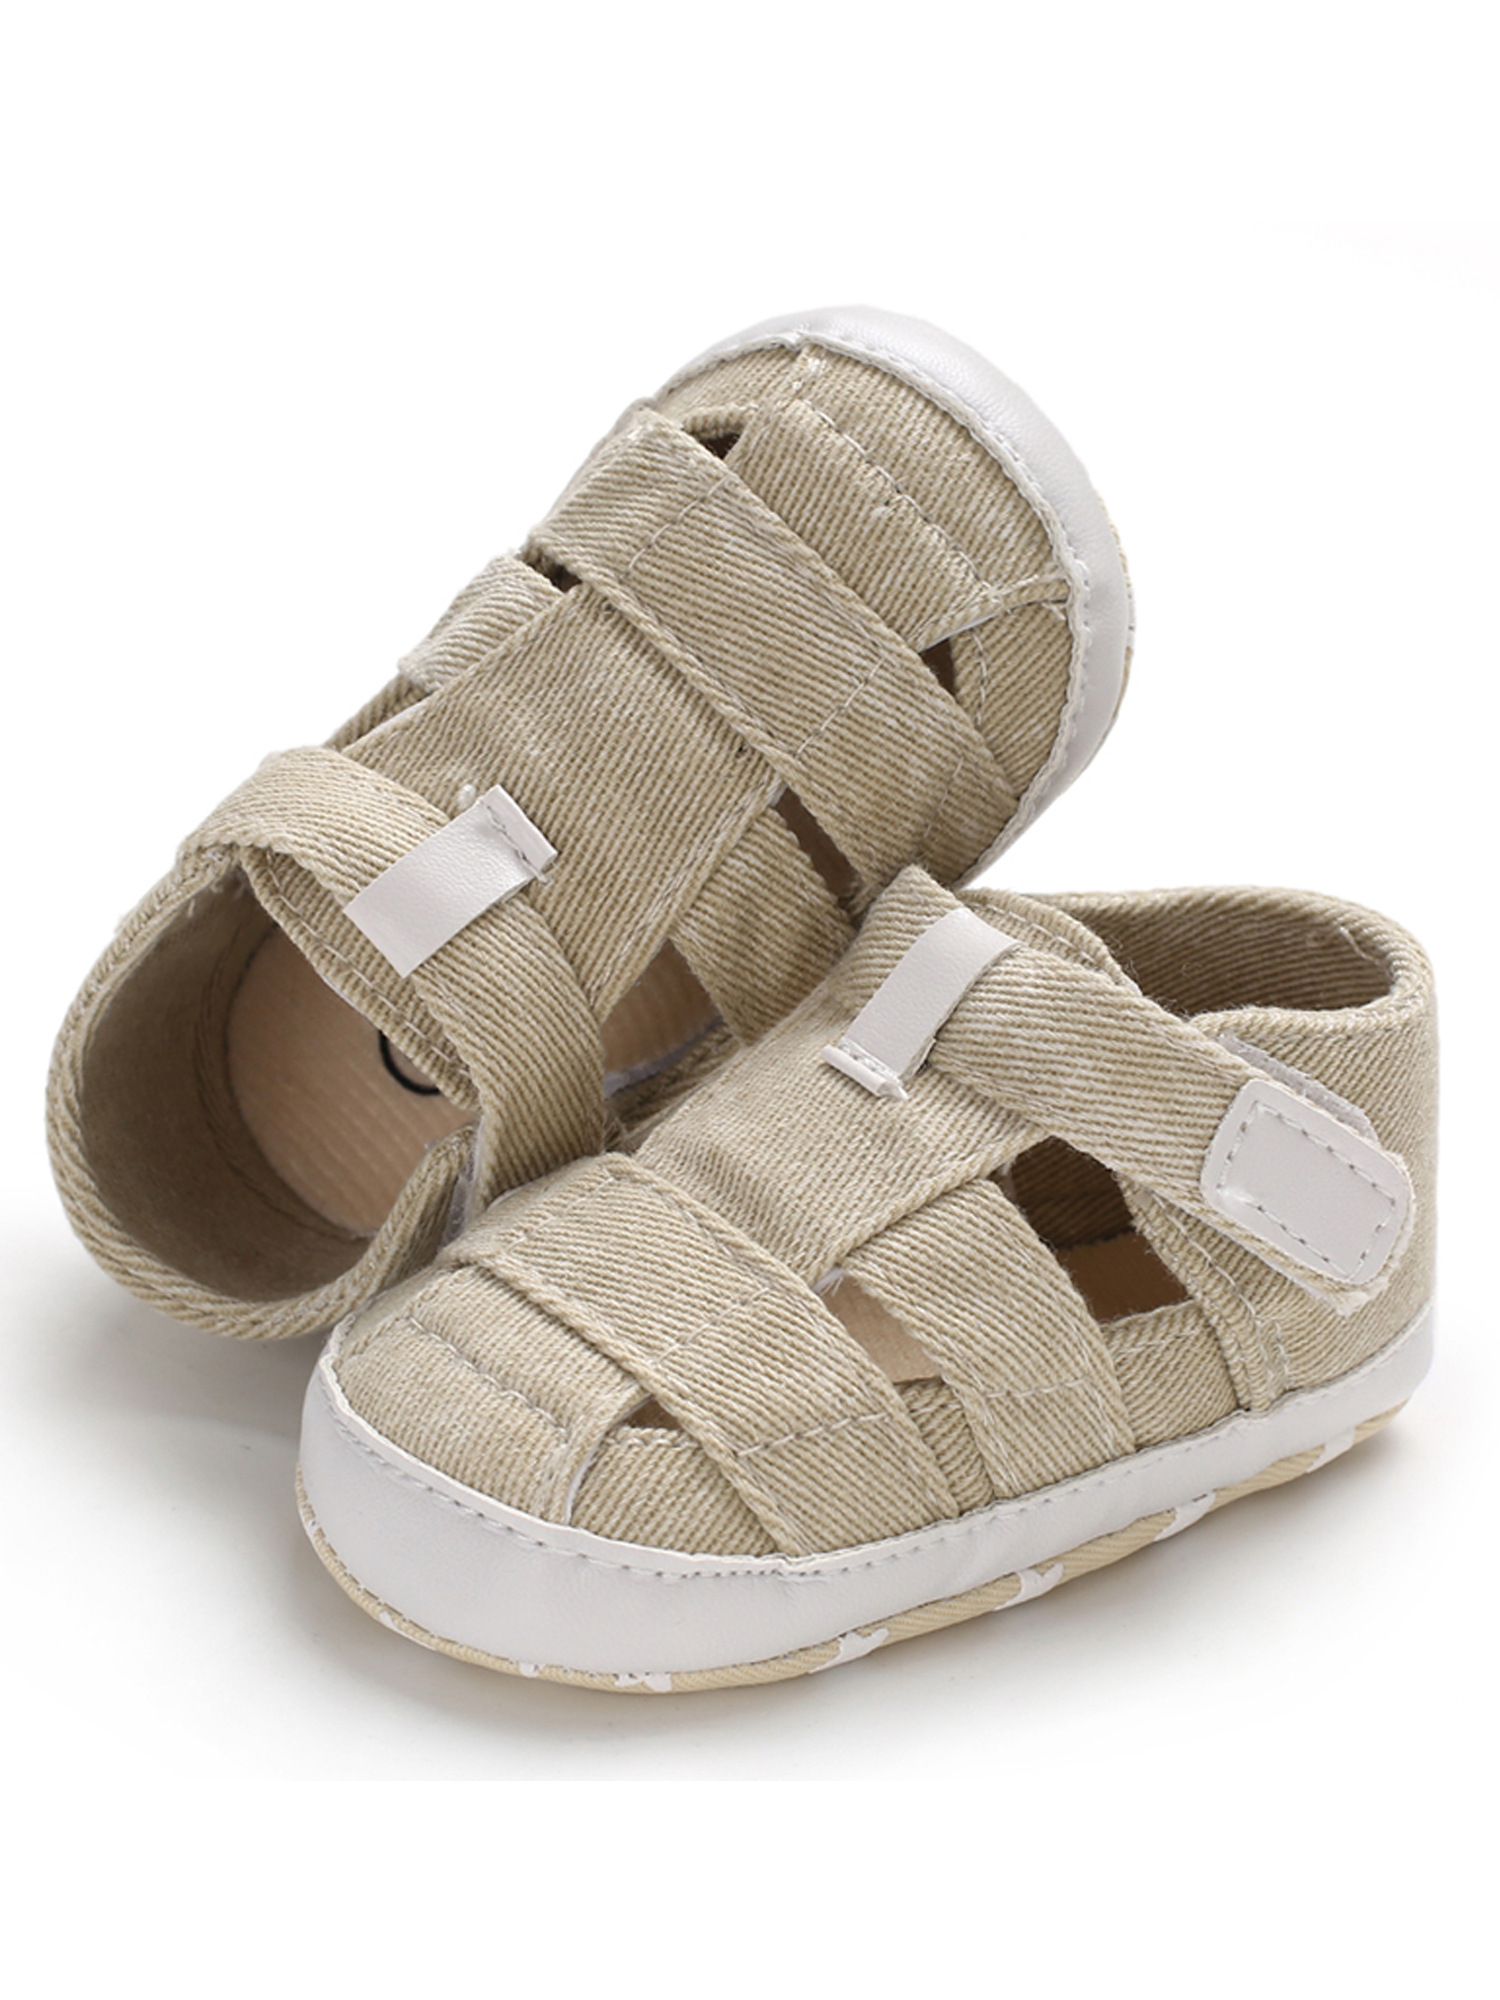 UBELLA Baby Girls Boys Summer Outdoor Closed Toe Strap Fisherman Sandals Toddler Flat Prewalker Shoes